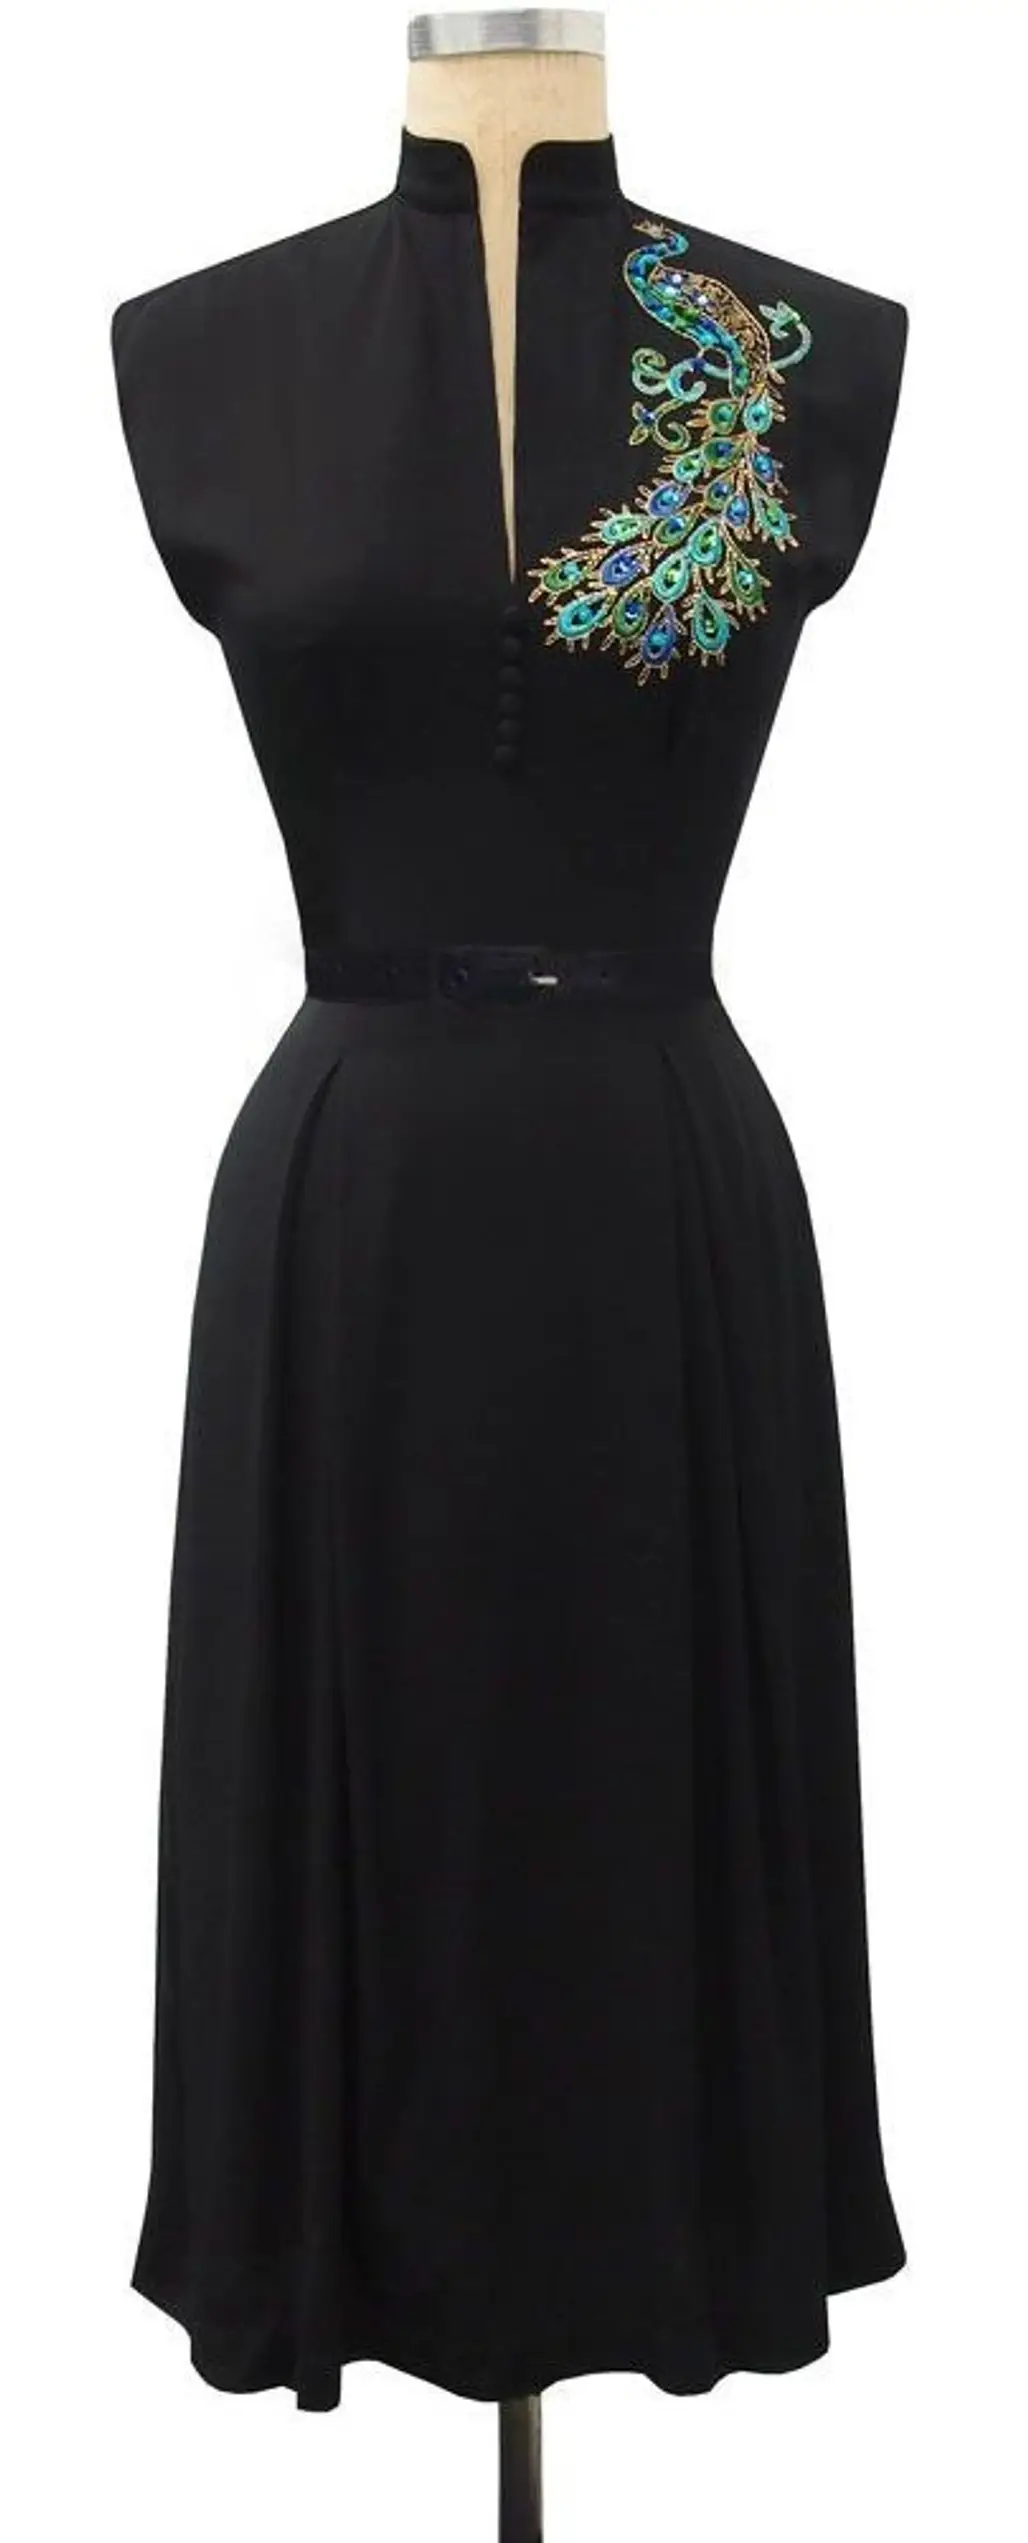 dress,clothing,day dress,little black dress,sleeve,